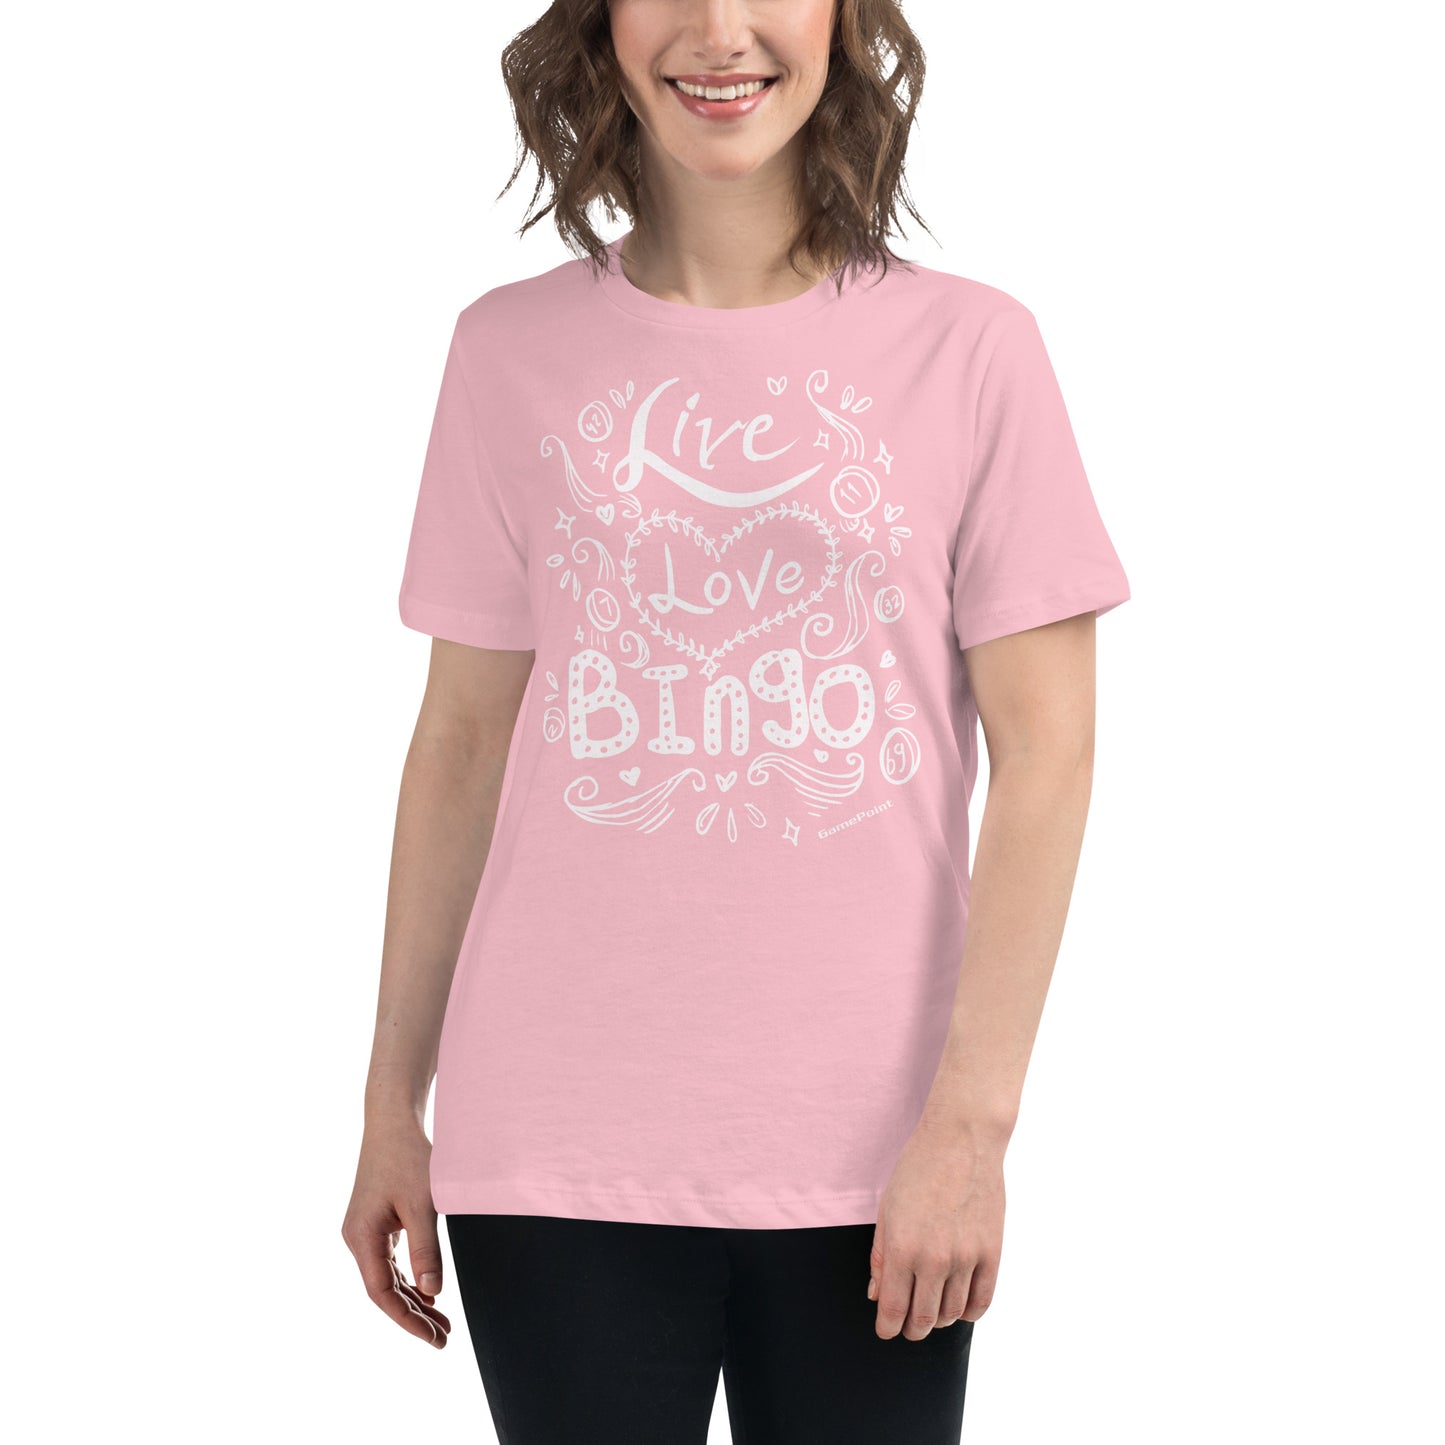 Live Love Bingo - Women's T-shirt